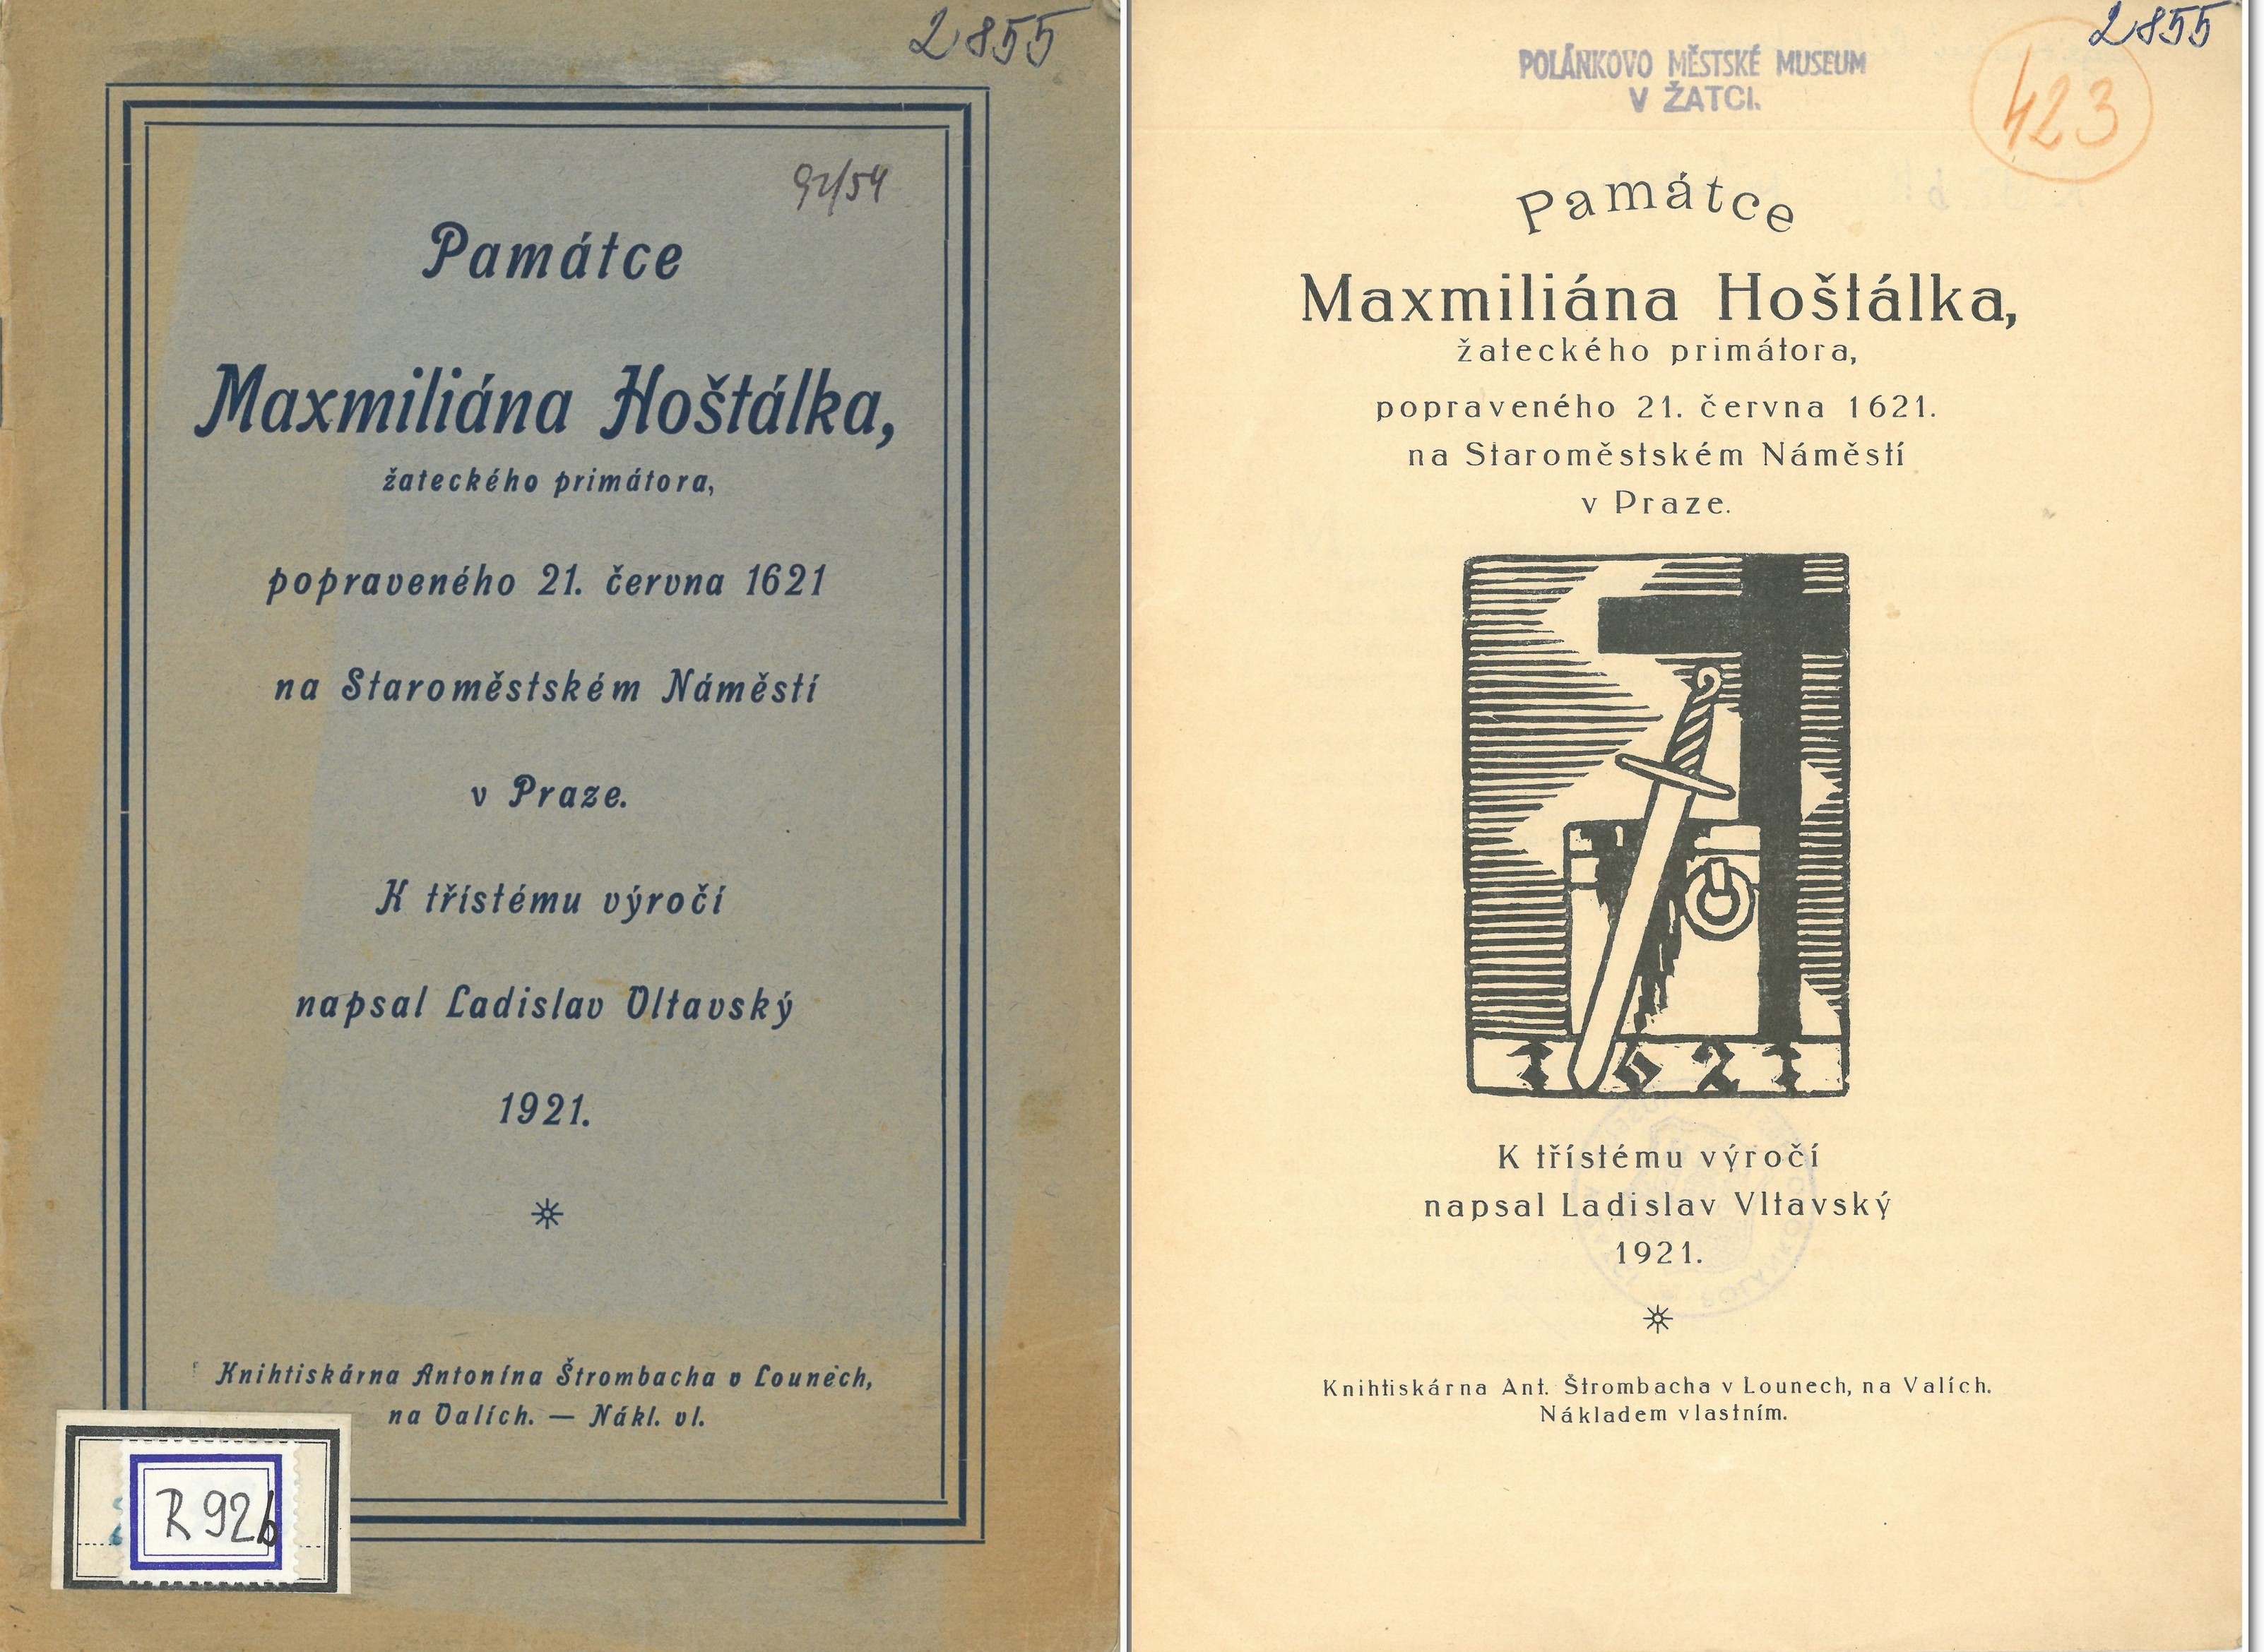 Vltavského brožura z roku 1921t